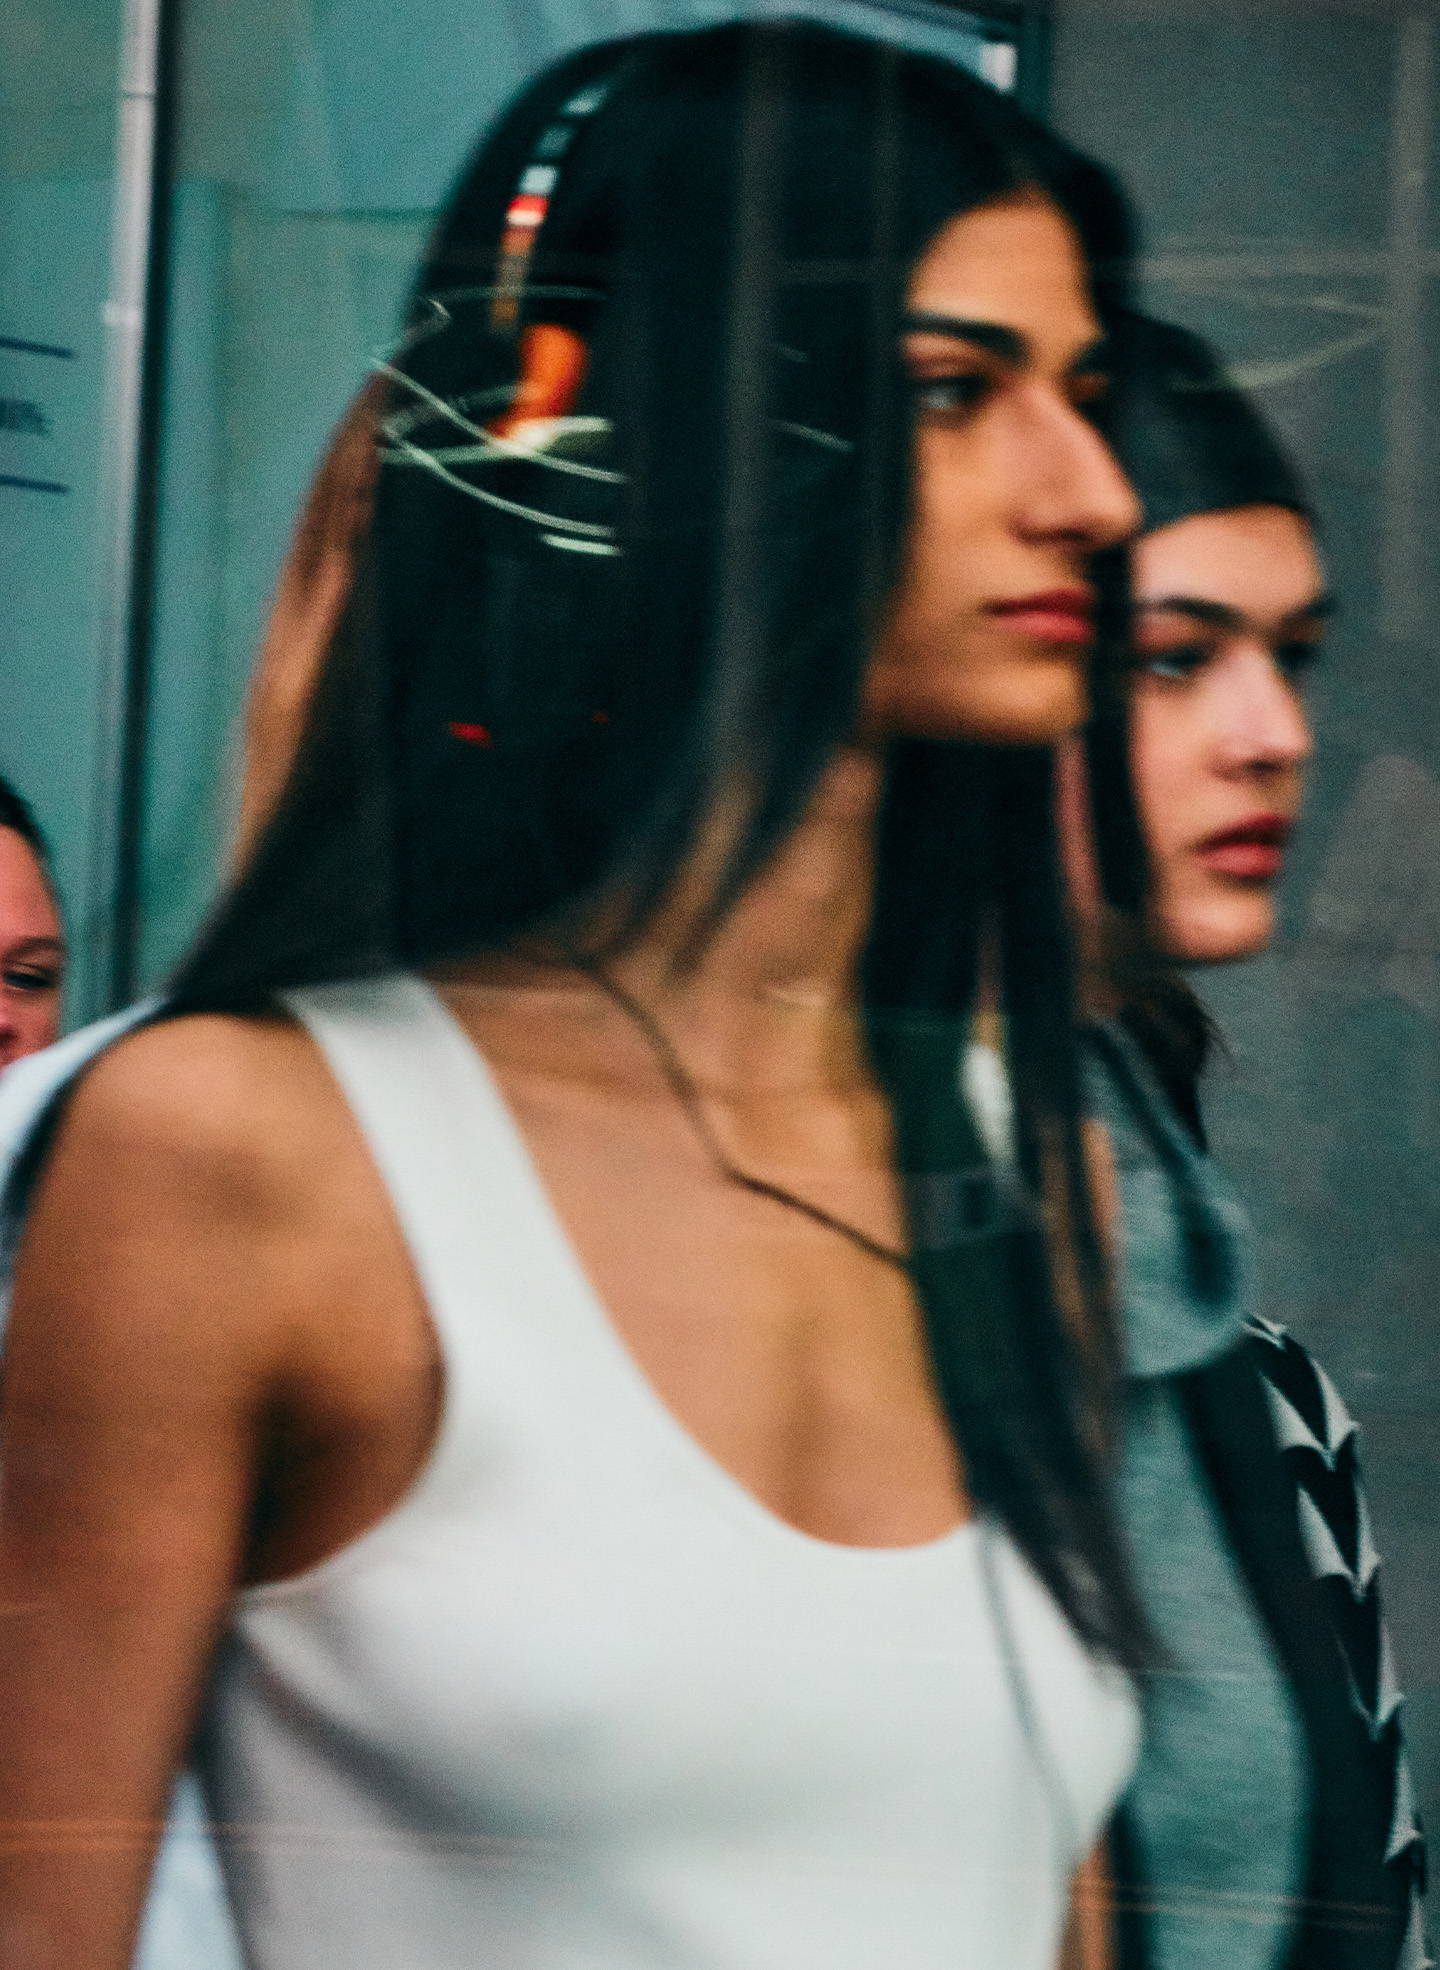 Model on NYC sidewalk with headphones